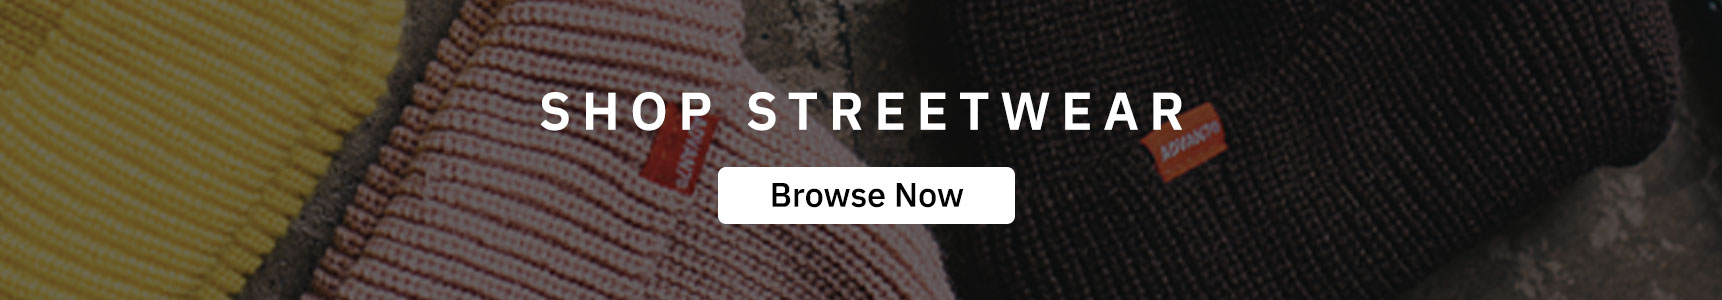 blog_inpost_shop-streetwear